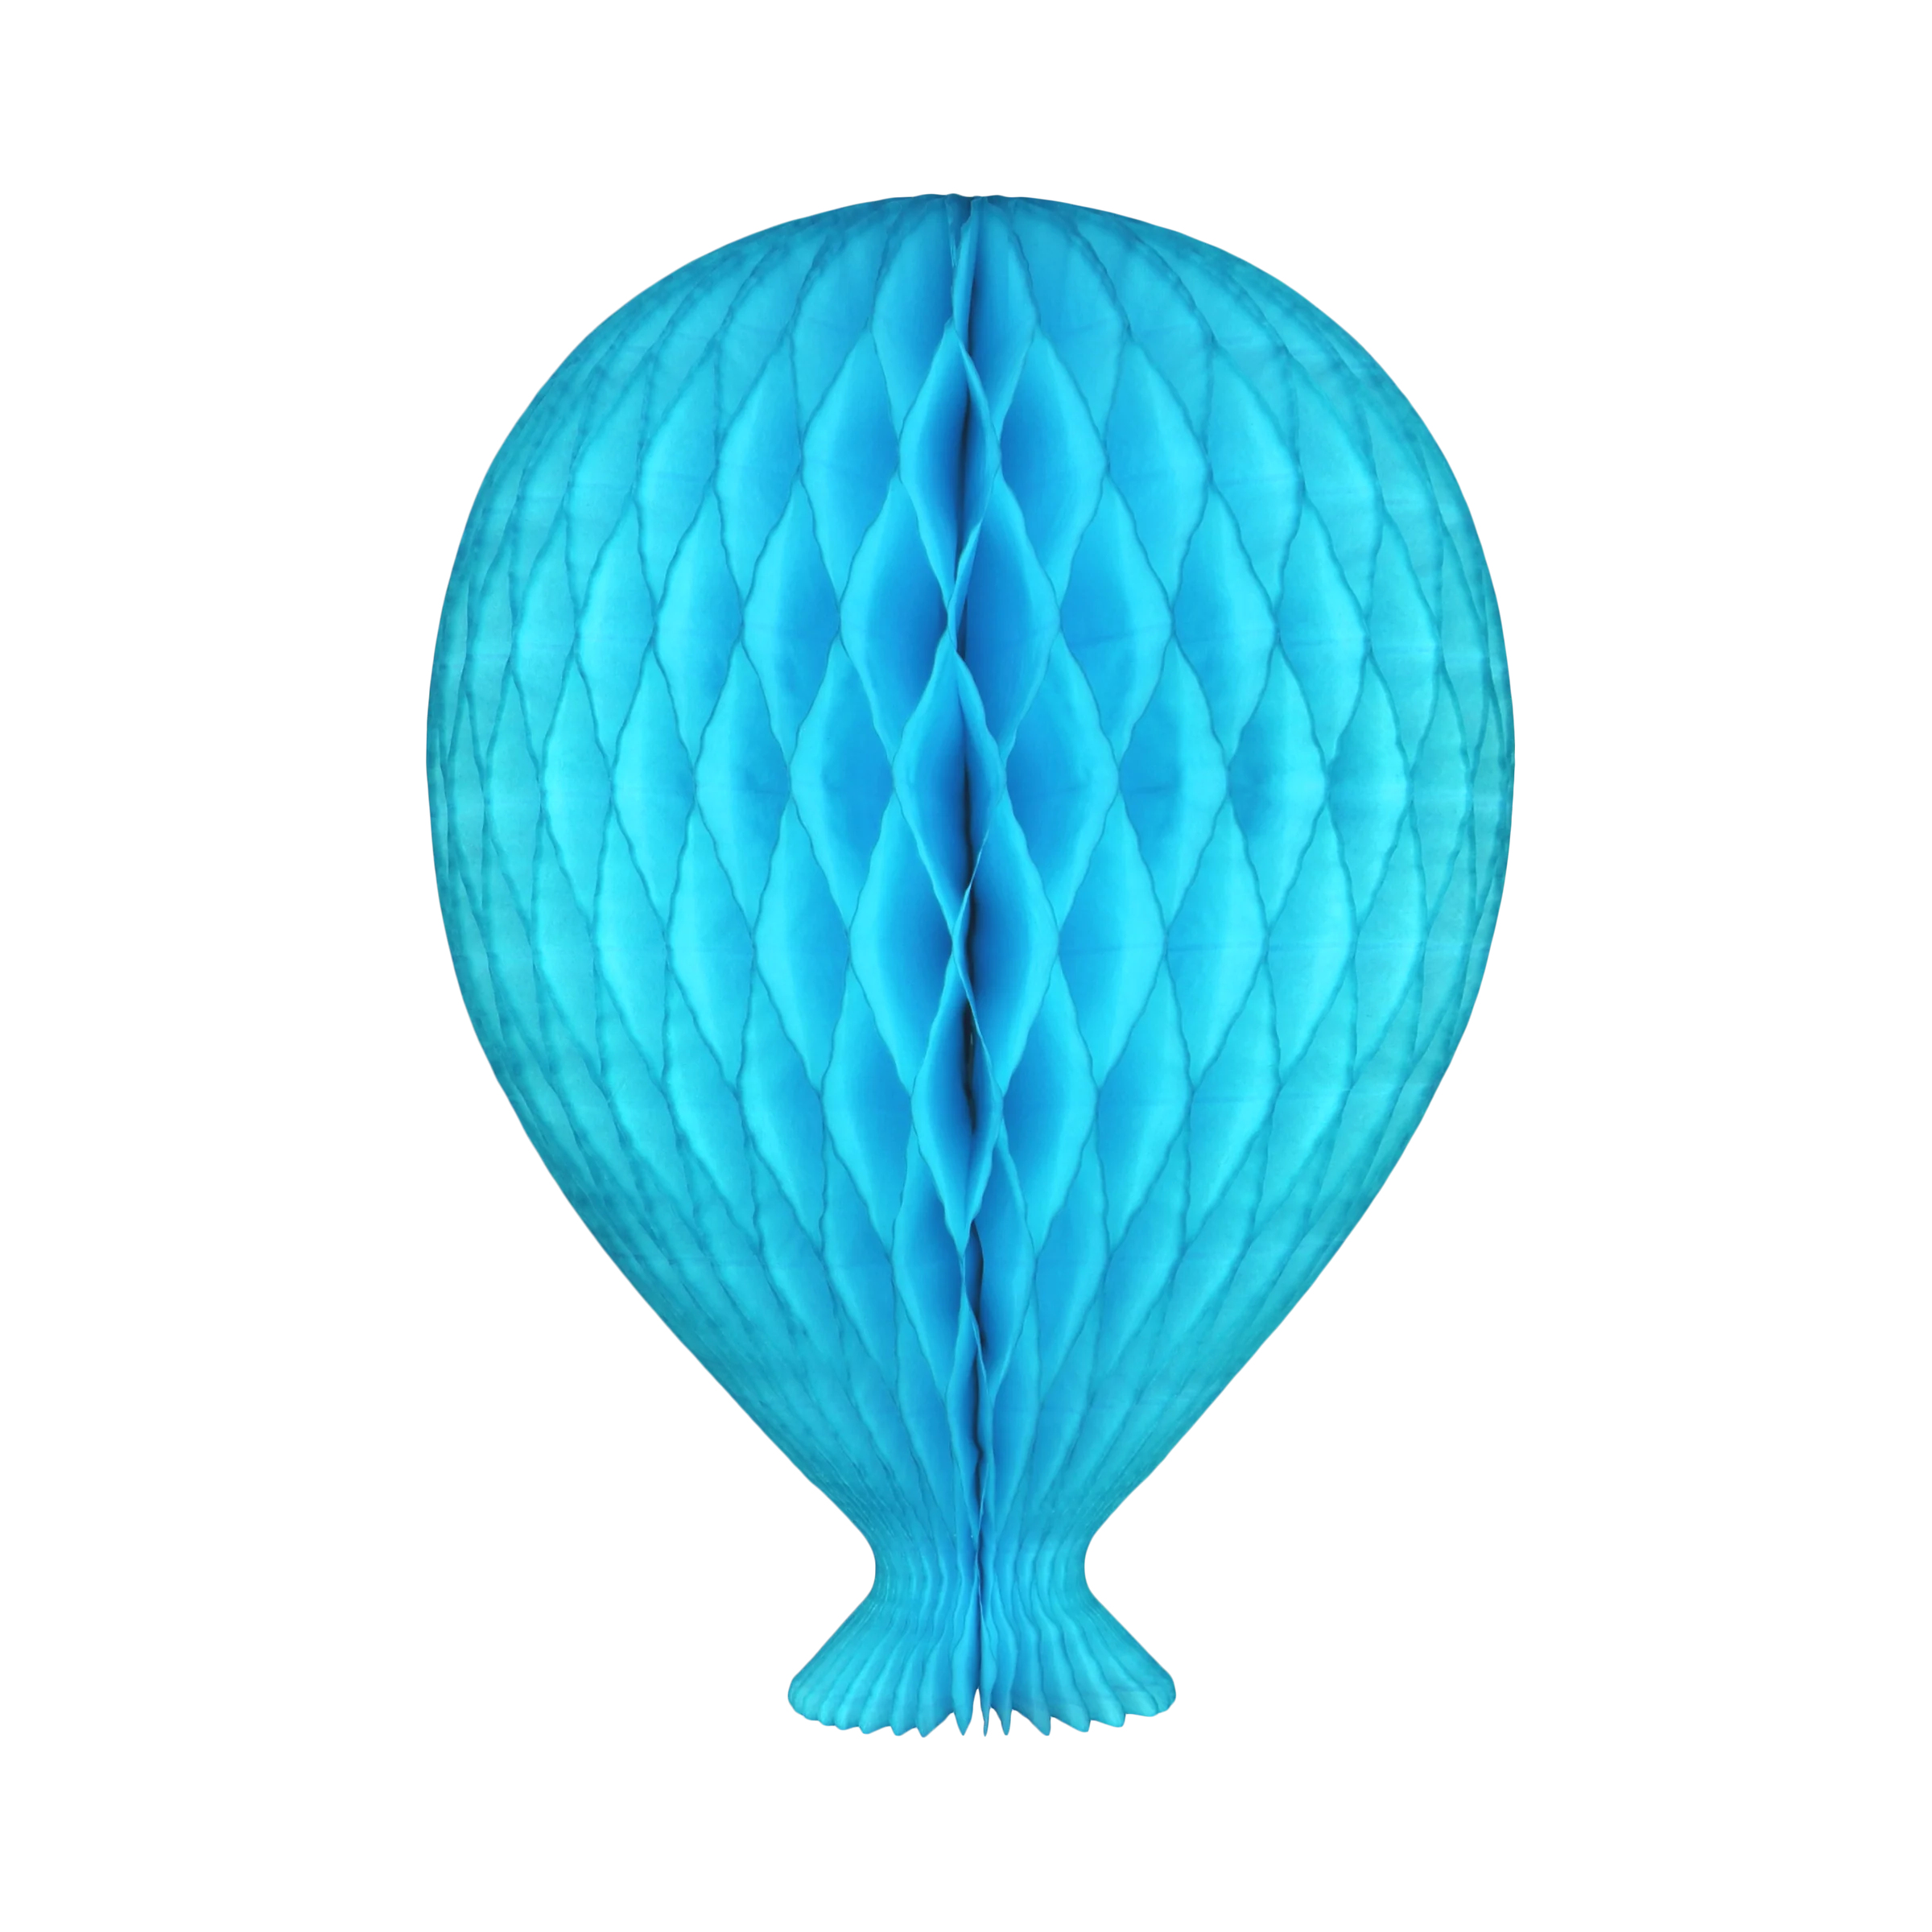 The Conscious Honeycomb Balloon 30cm Bright Blue